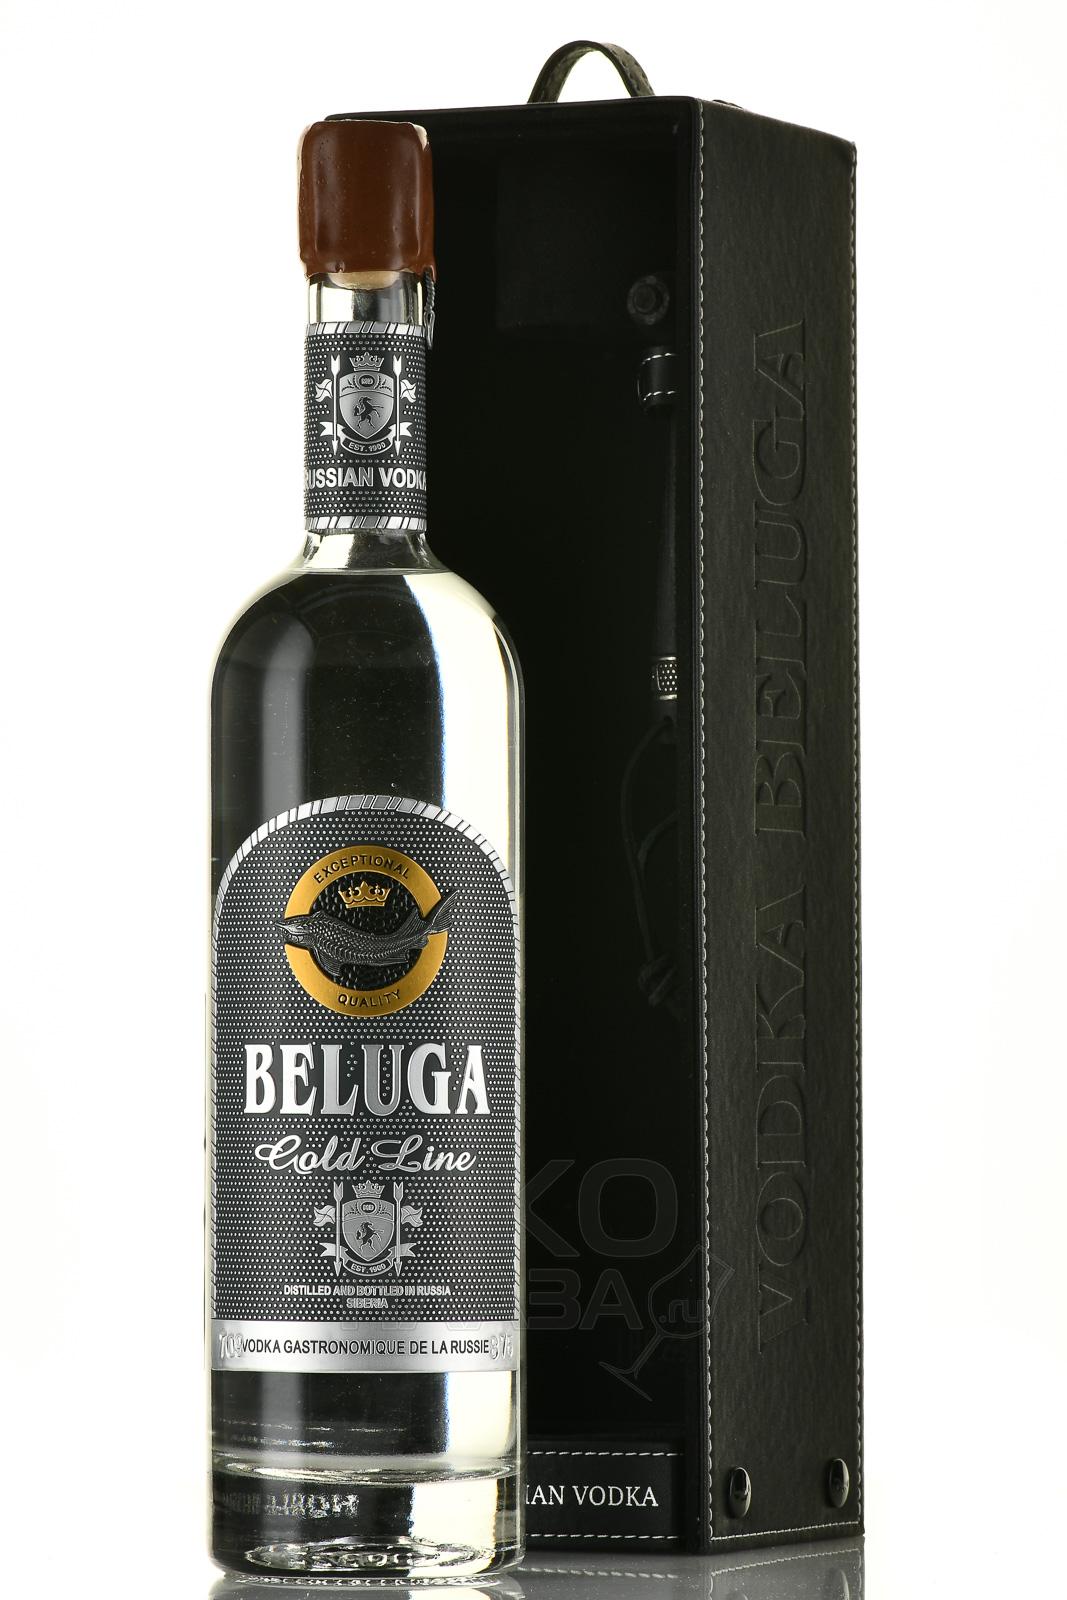 Beluga Gold Line - водка Белуга Золотая Линия 0.75 л с кисточкой в коже